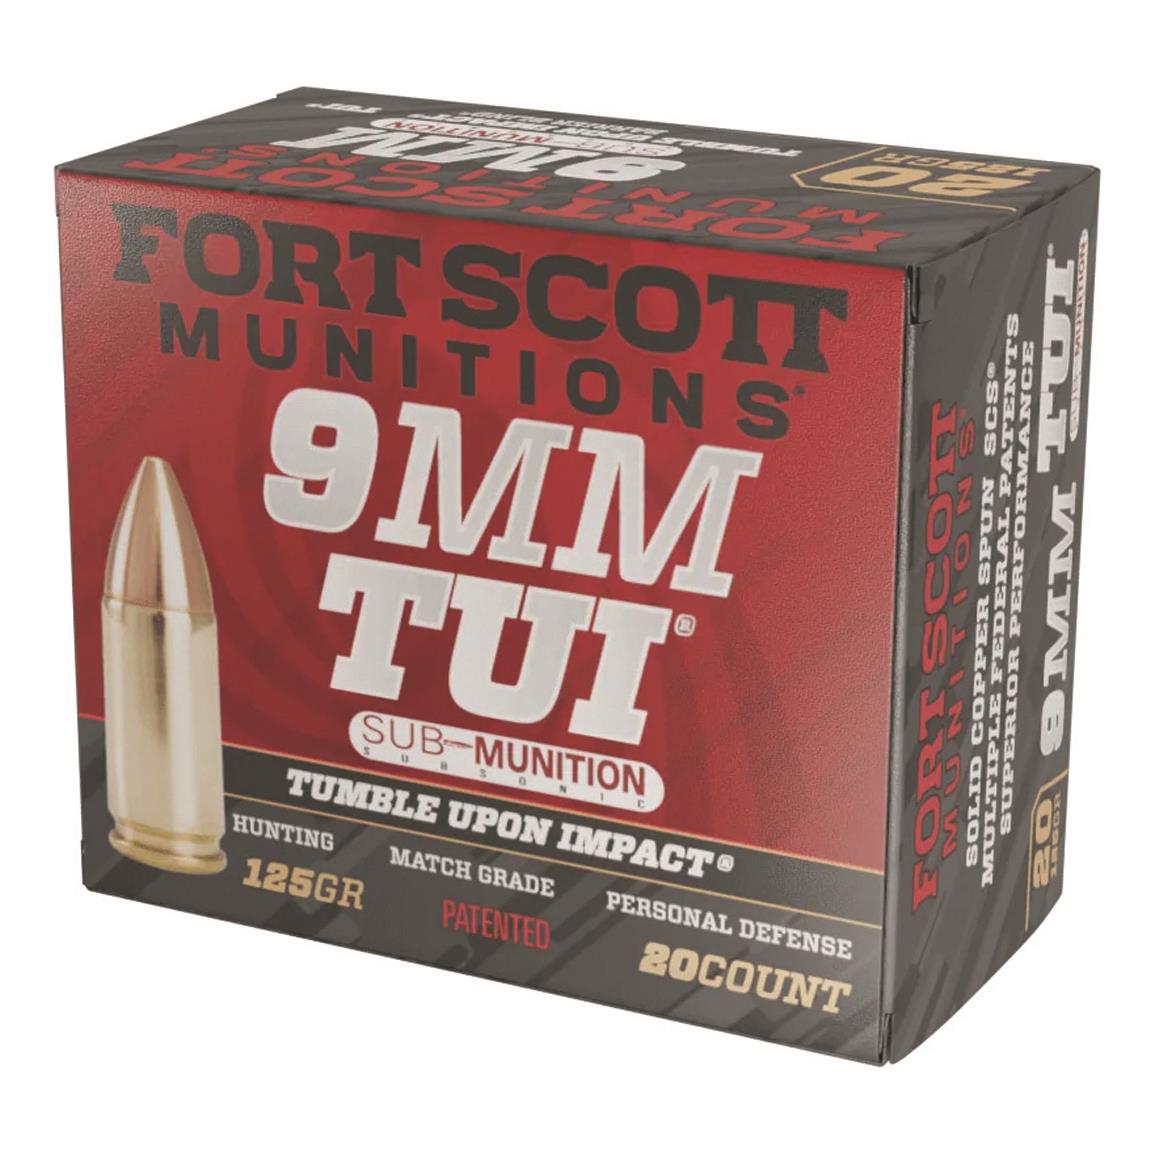 Fort Scott Tumble Upon Impact Sub-Munition Subsonic, 9mm, SCS, 125 Grain, 20 Rounds